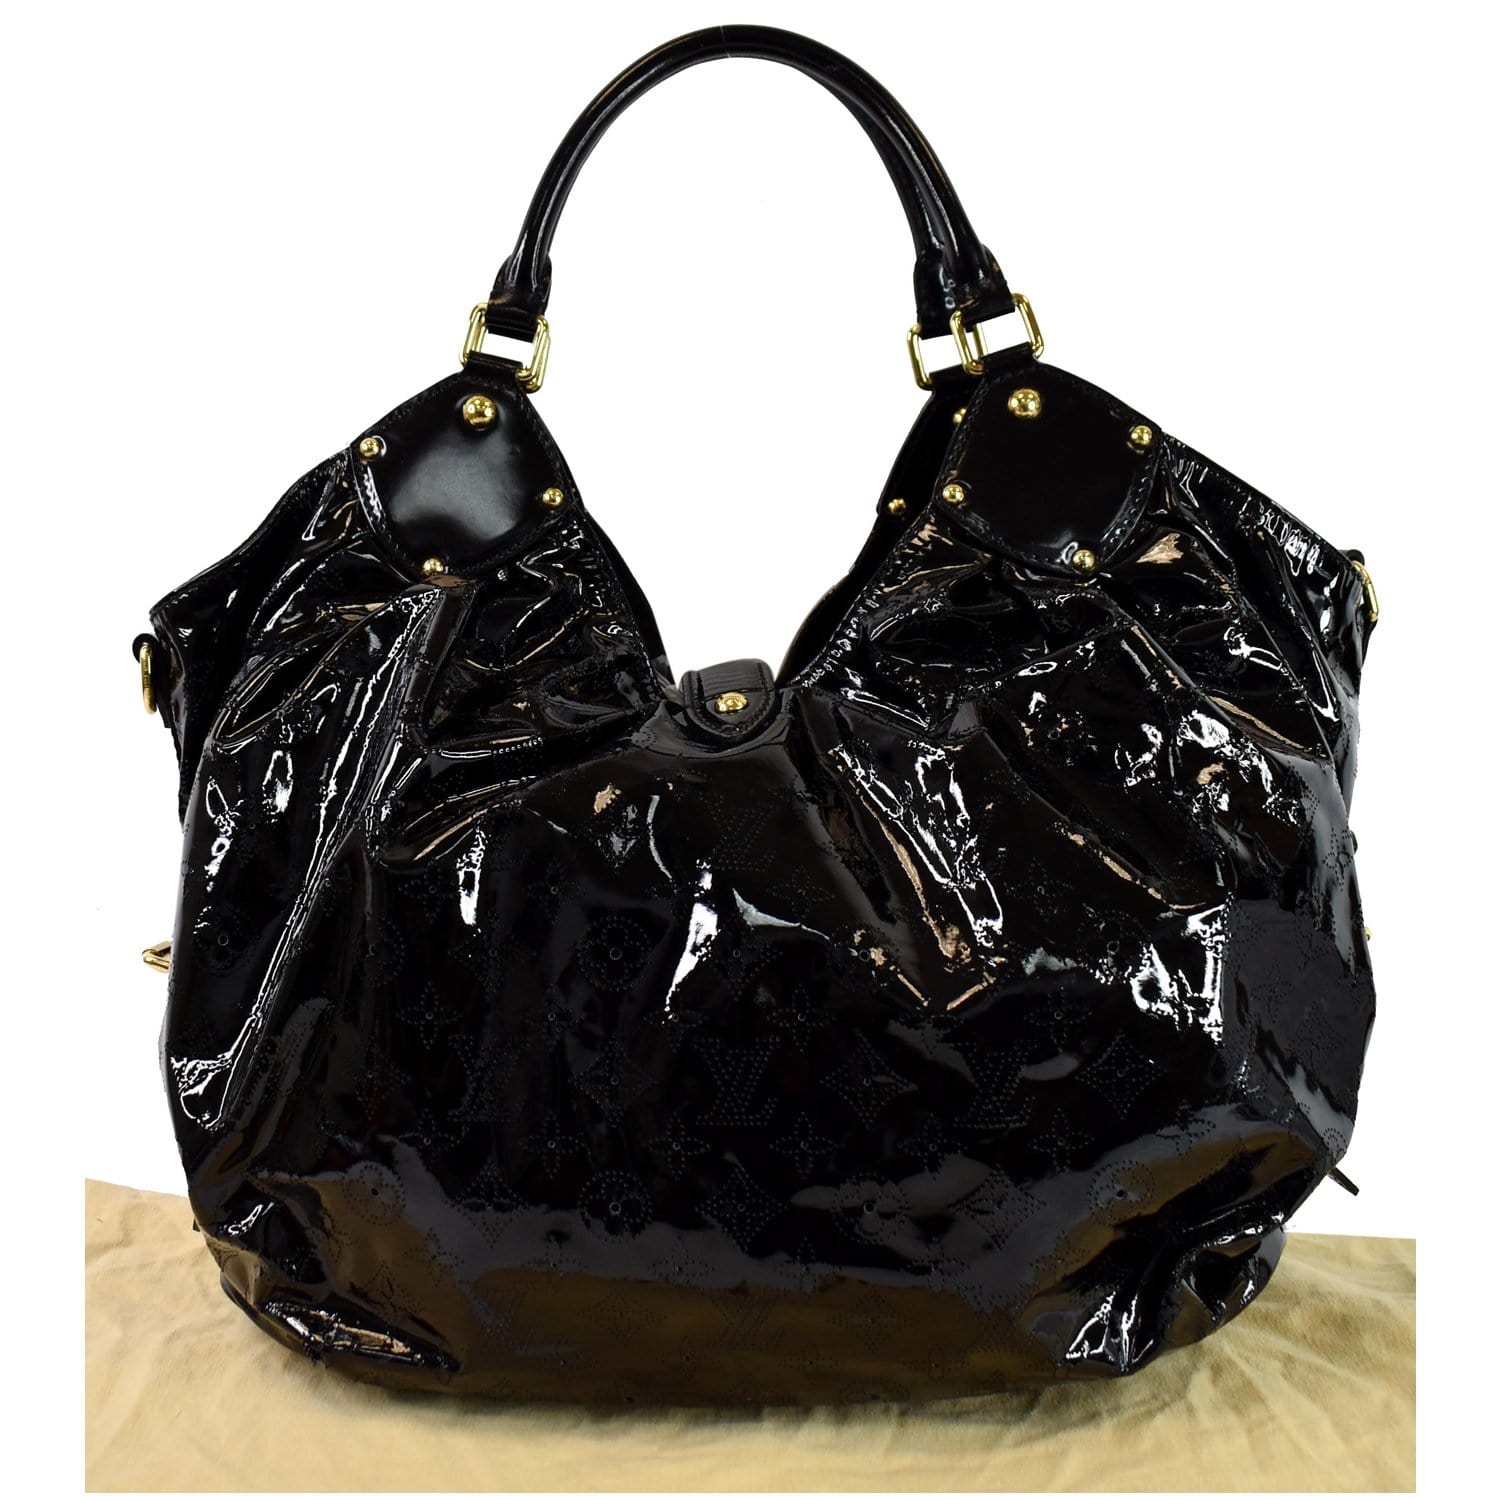 Patent leather handbag Louis Vuitton Black in Patent leather